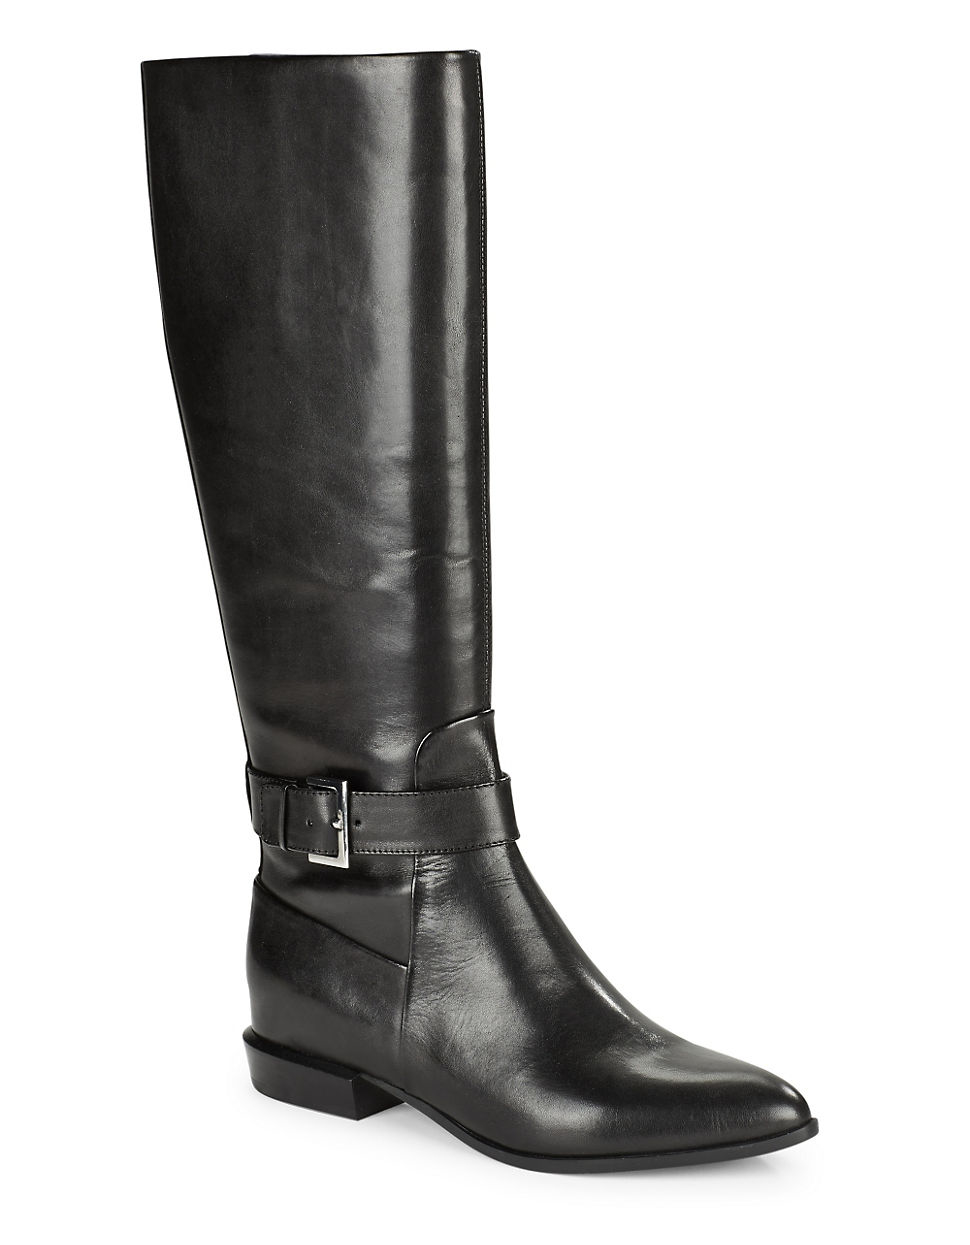 Lyst - Nine West Diablo Leather Knee-high Boots in Black